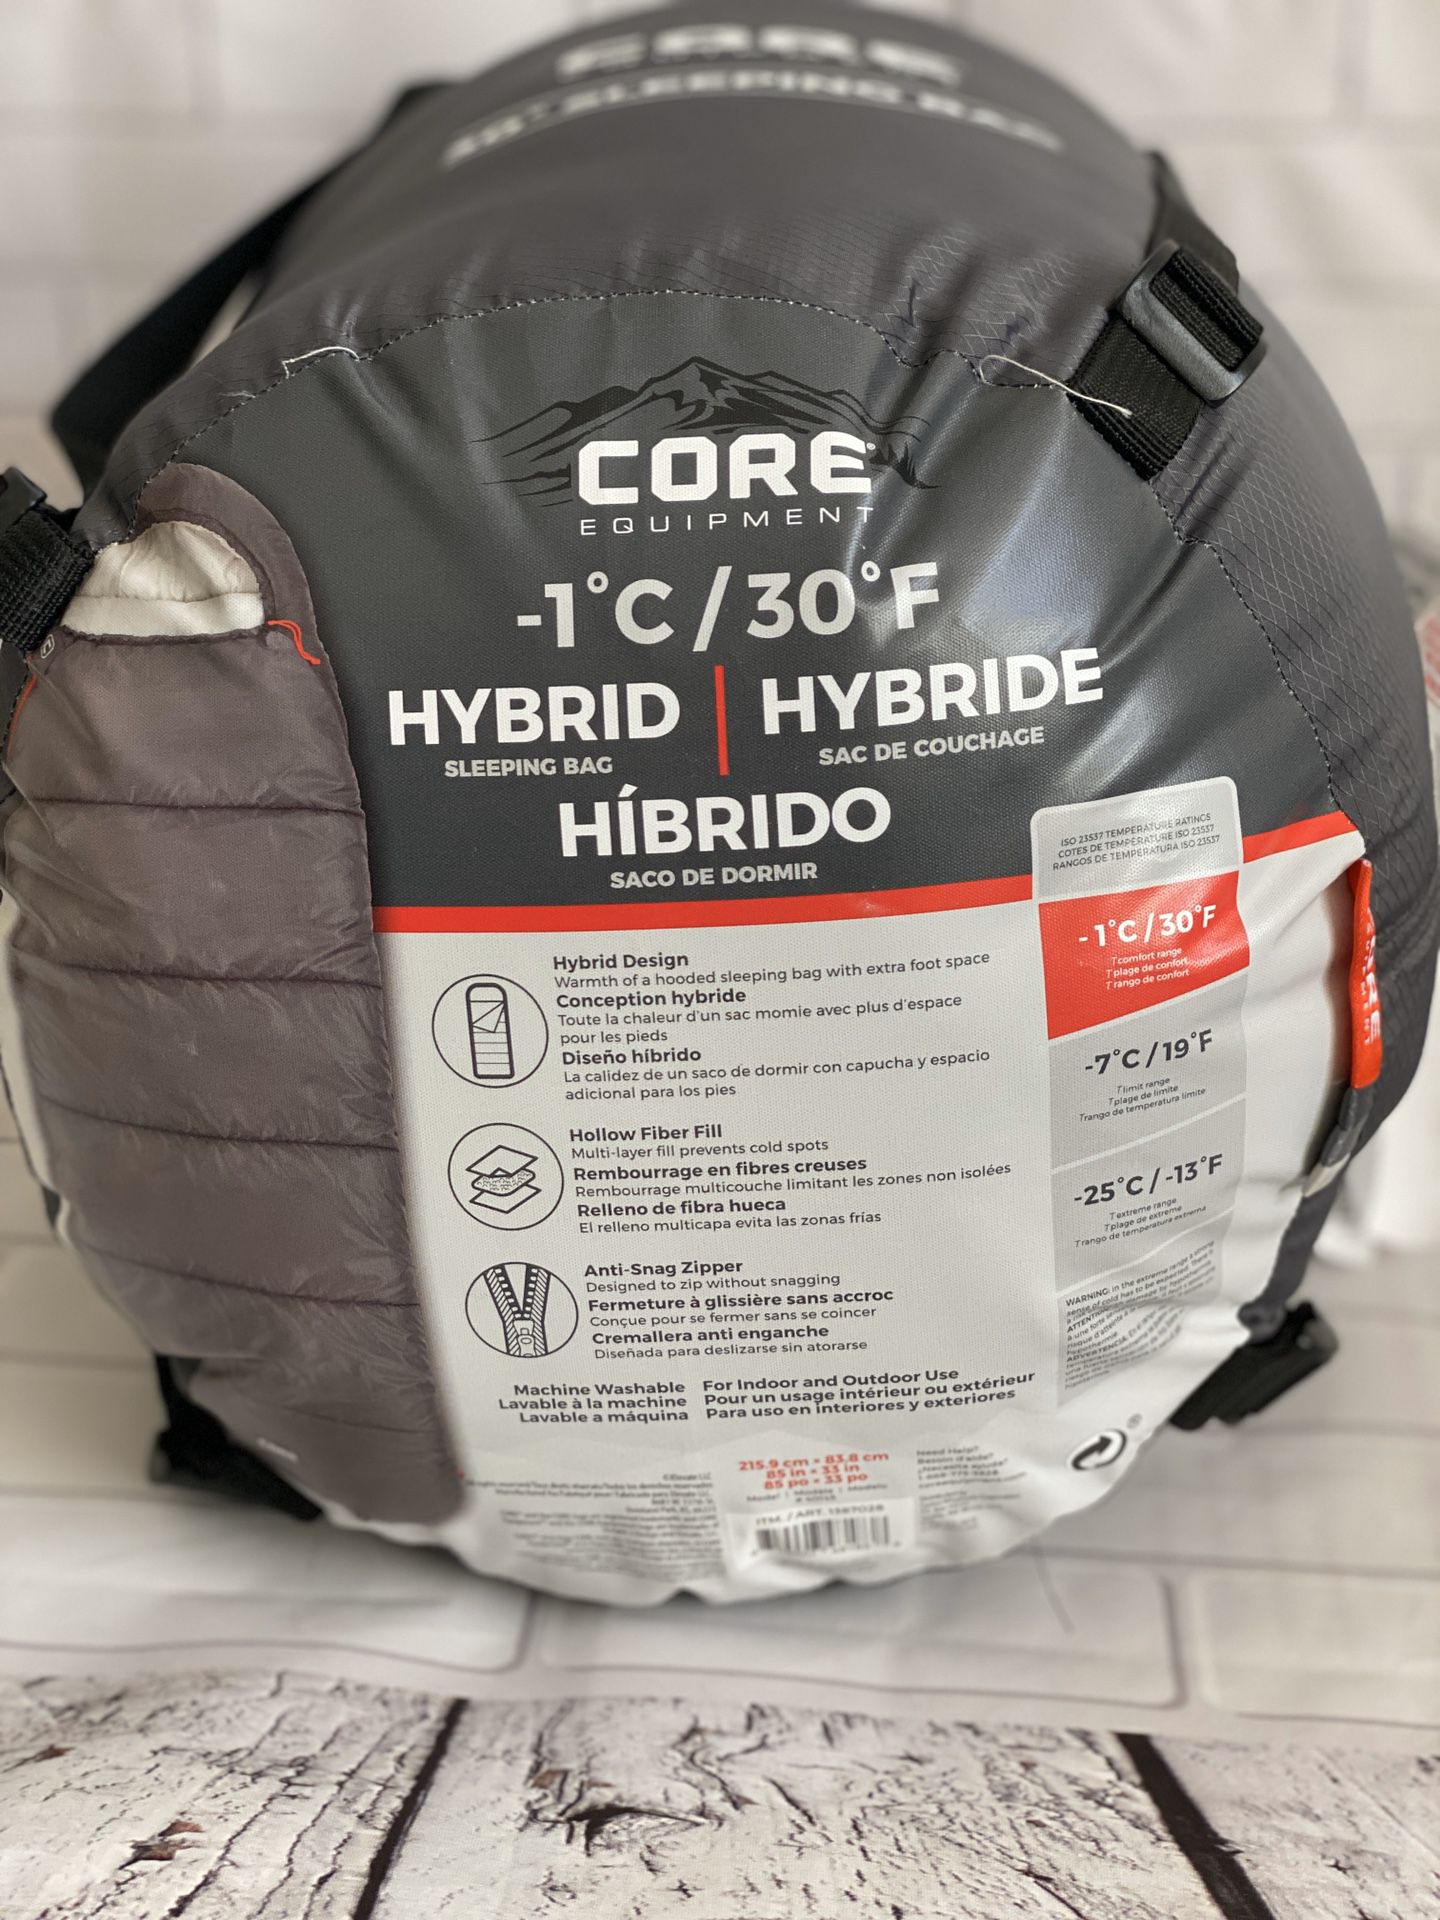 Sleepping Bag 30° F (-1° C). Core Equipment.